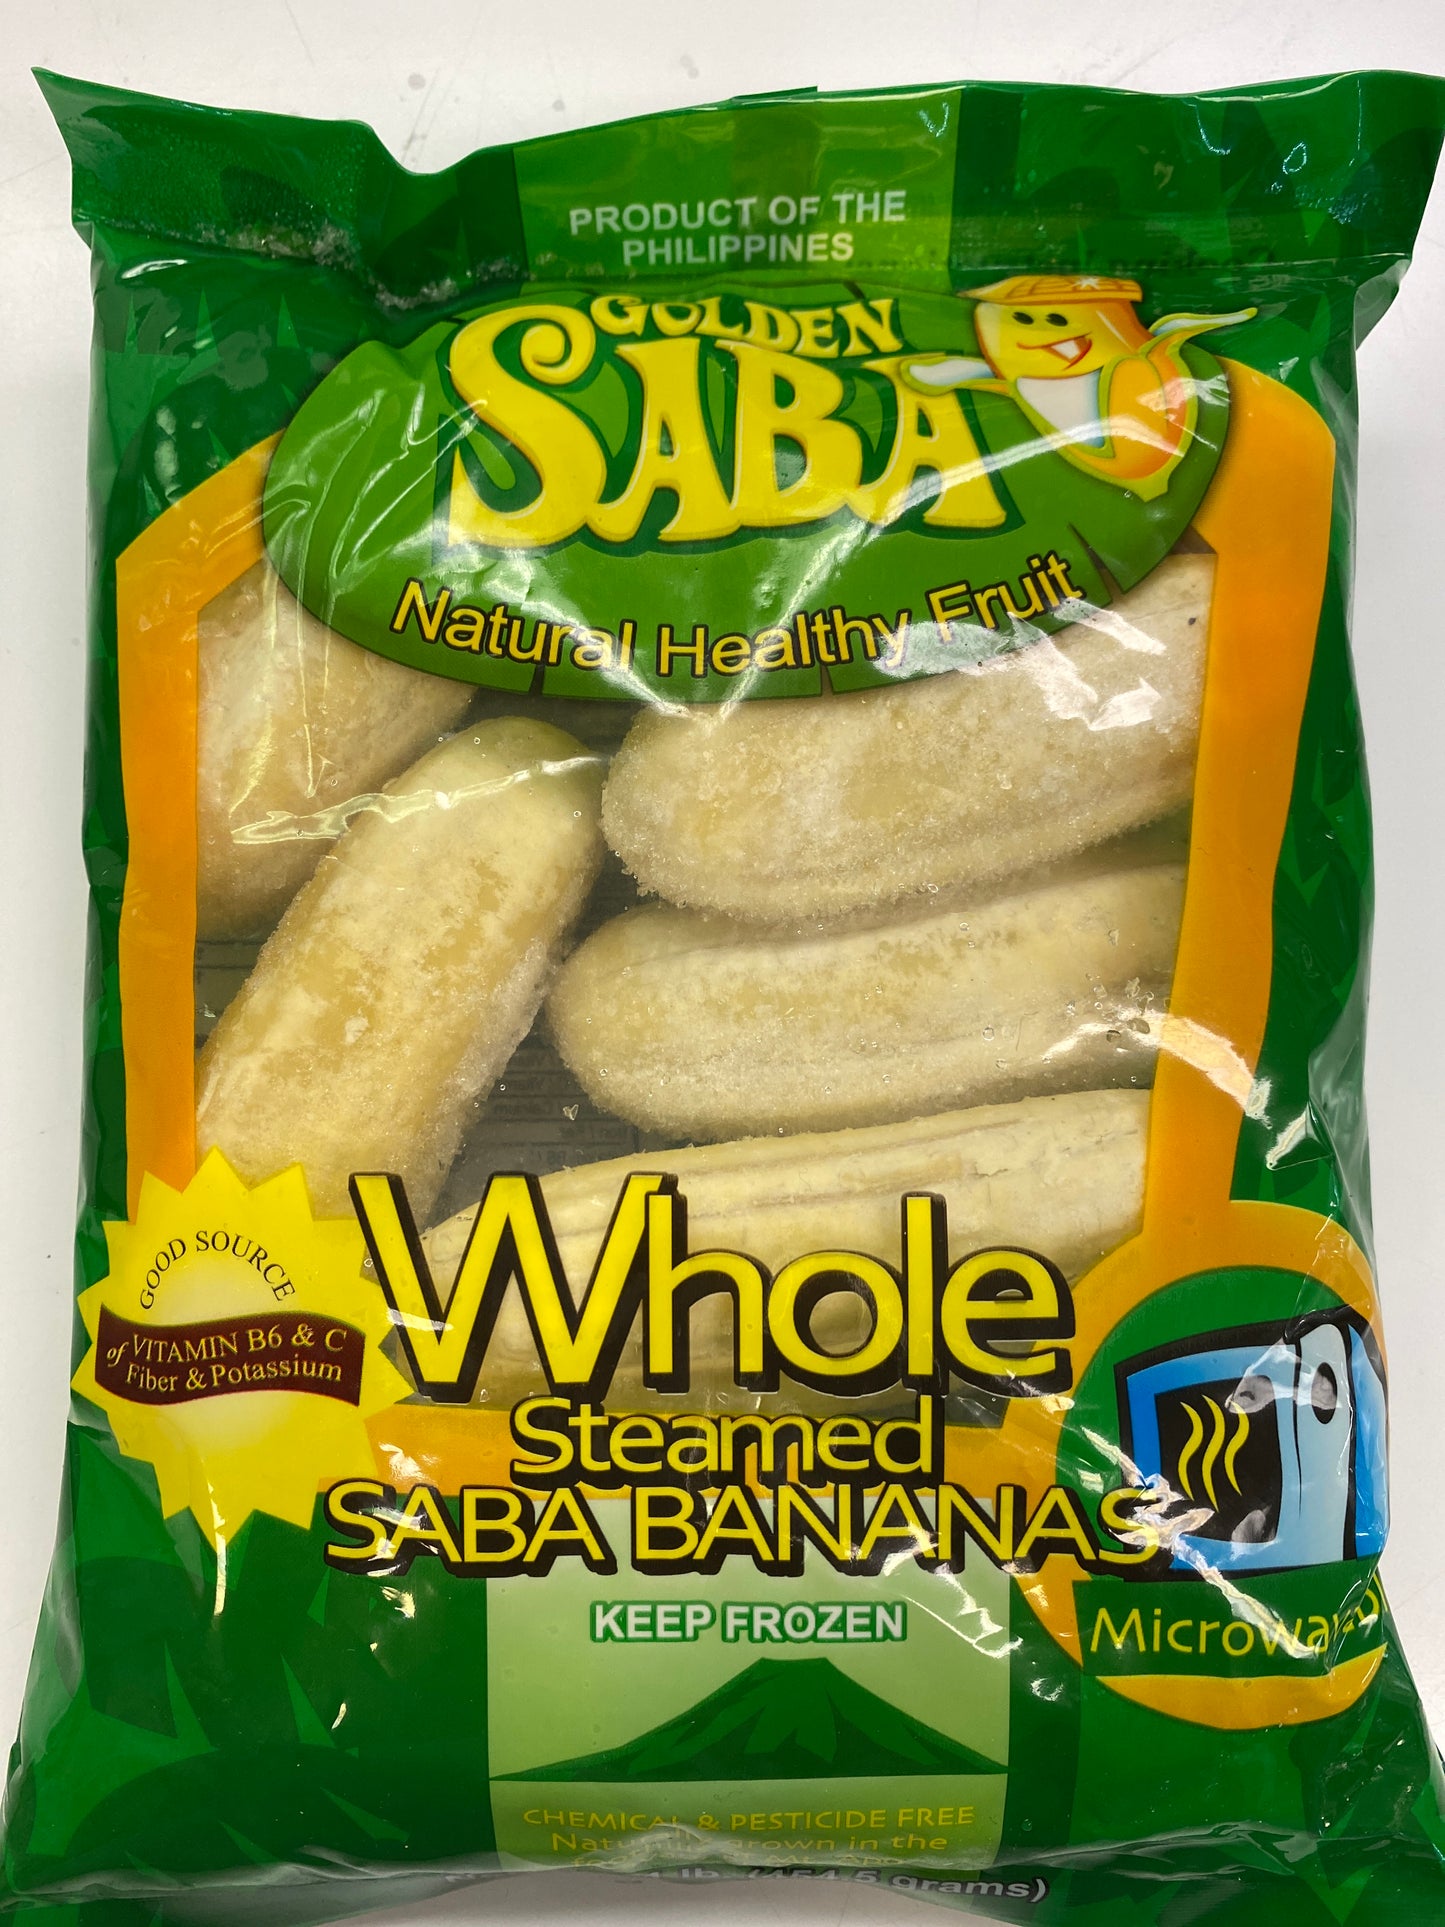 Golden Saba Whole Steamed Sab Bananas 1 Lb.